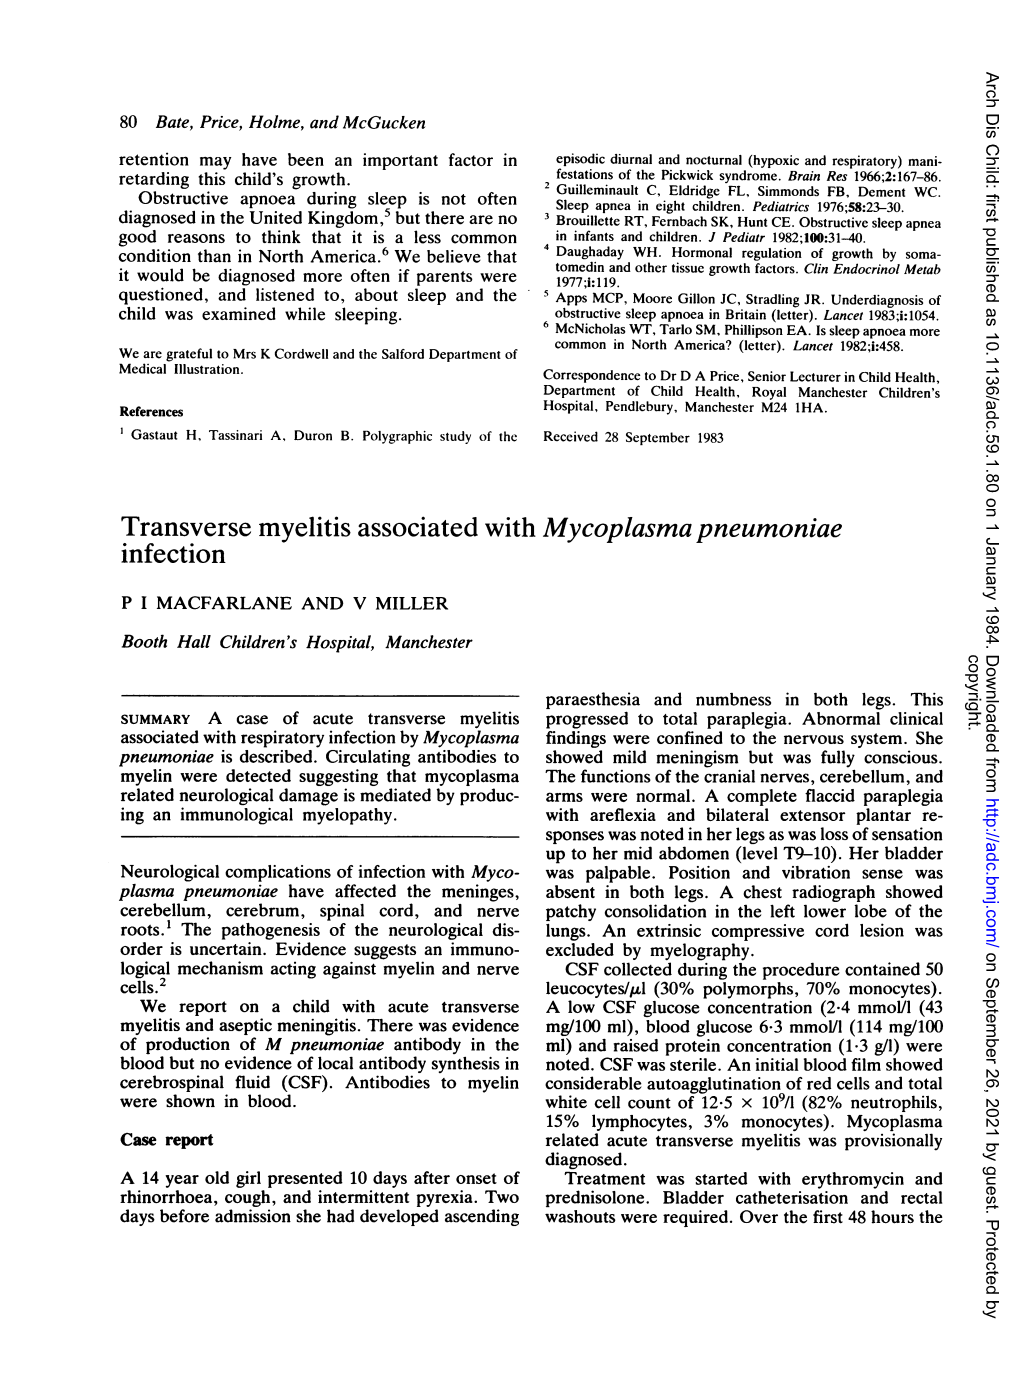 Transverse Myelitis Associated with Mycoplasma Pneumoniae Infection